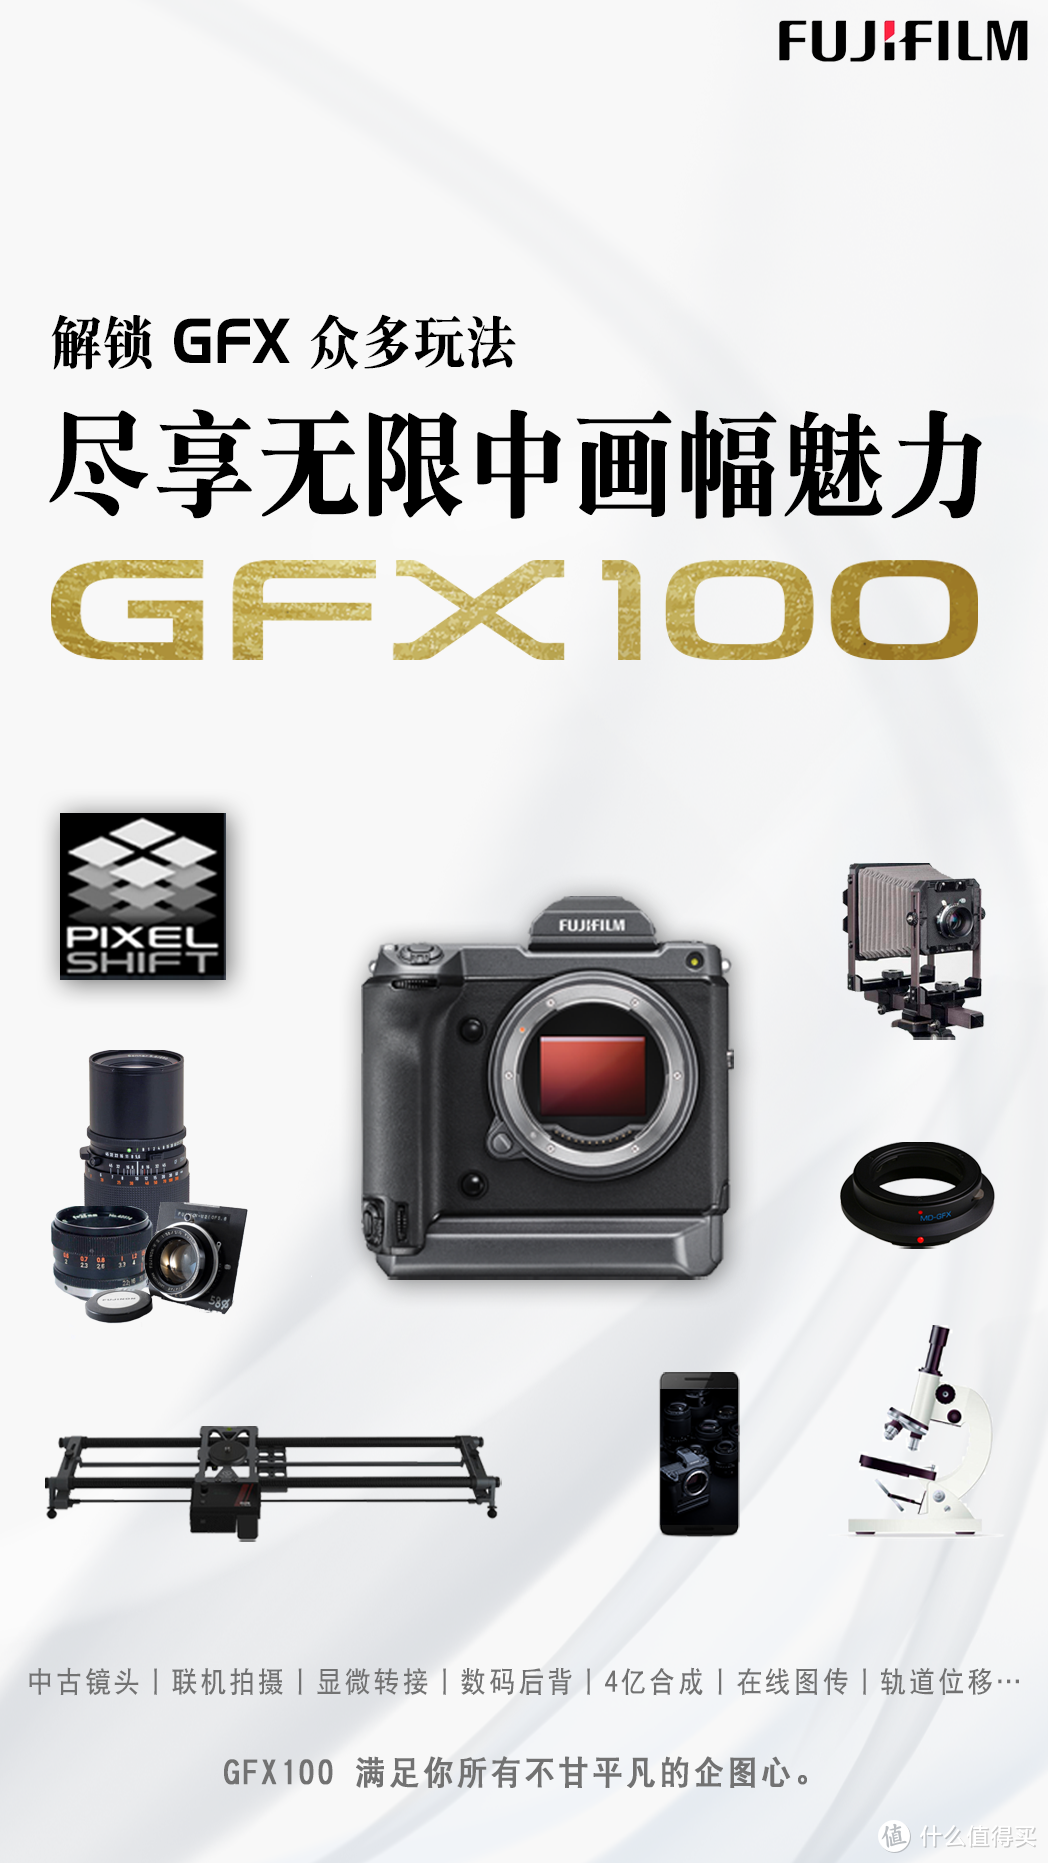 GFX100固件免费升级，再次加成，富士真良心